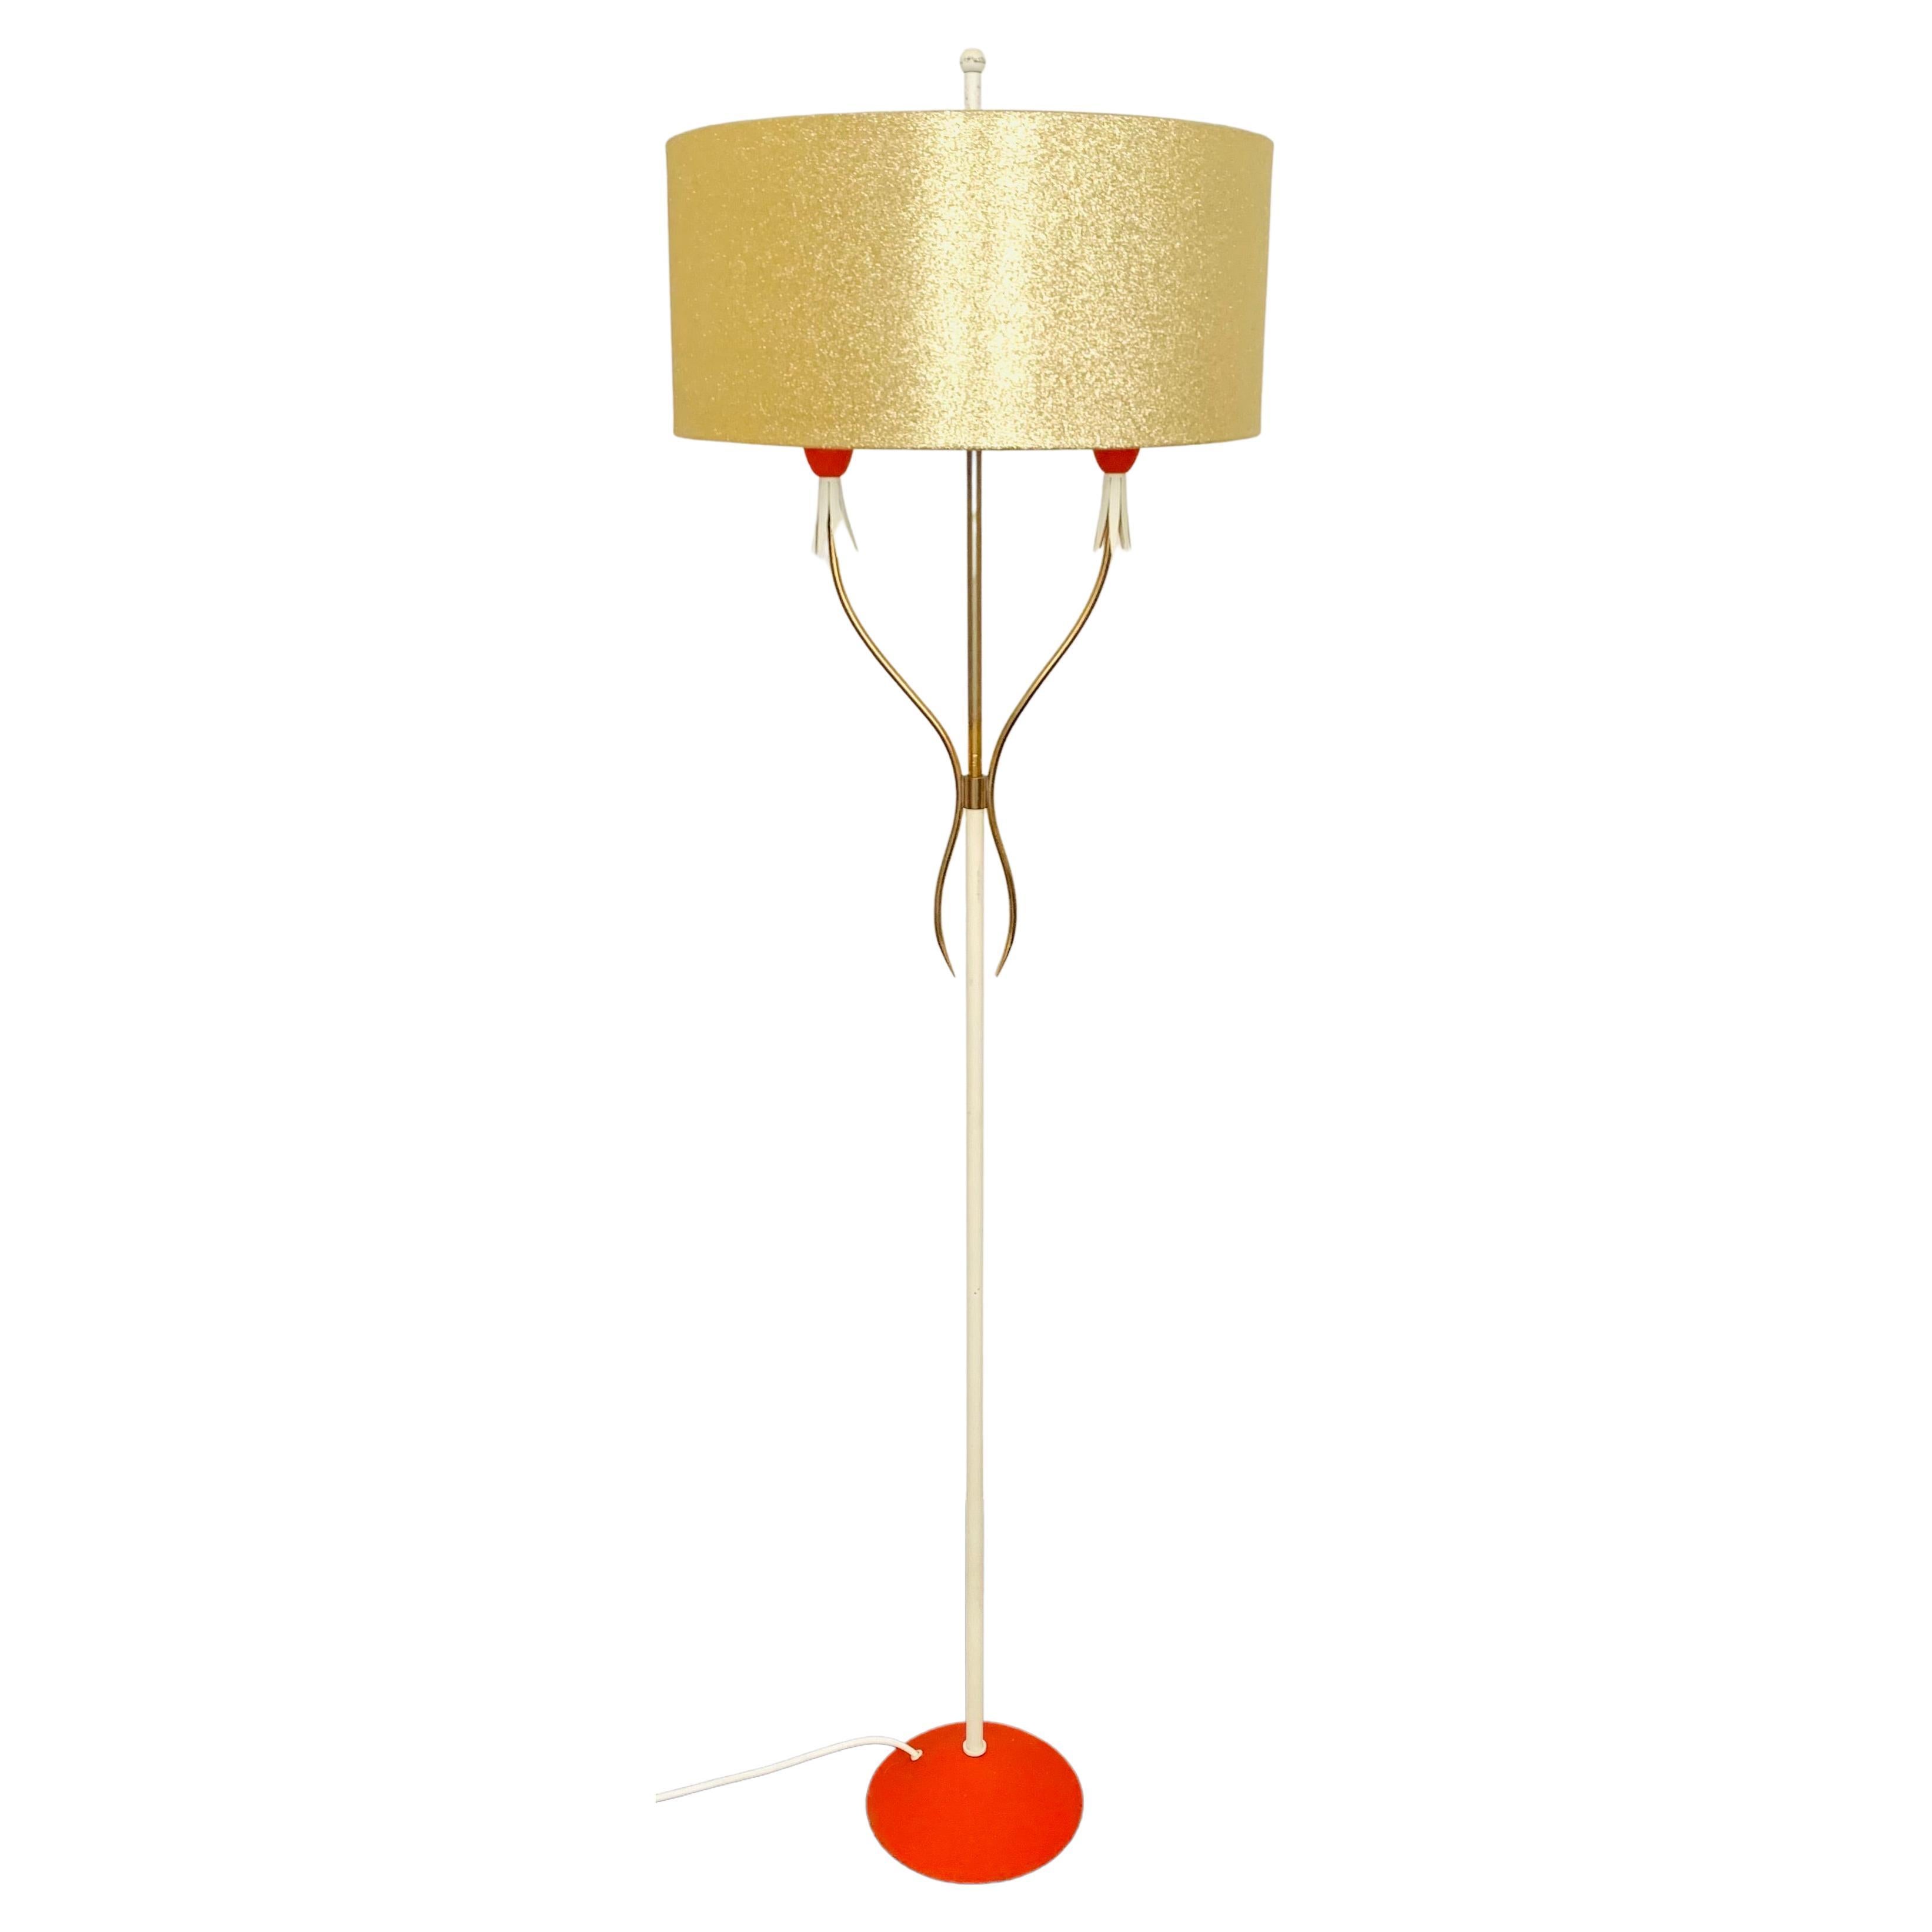 Italian Brass Floor Lamp For Sale